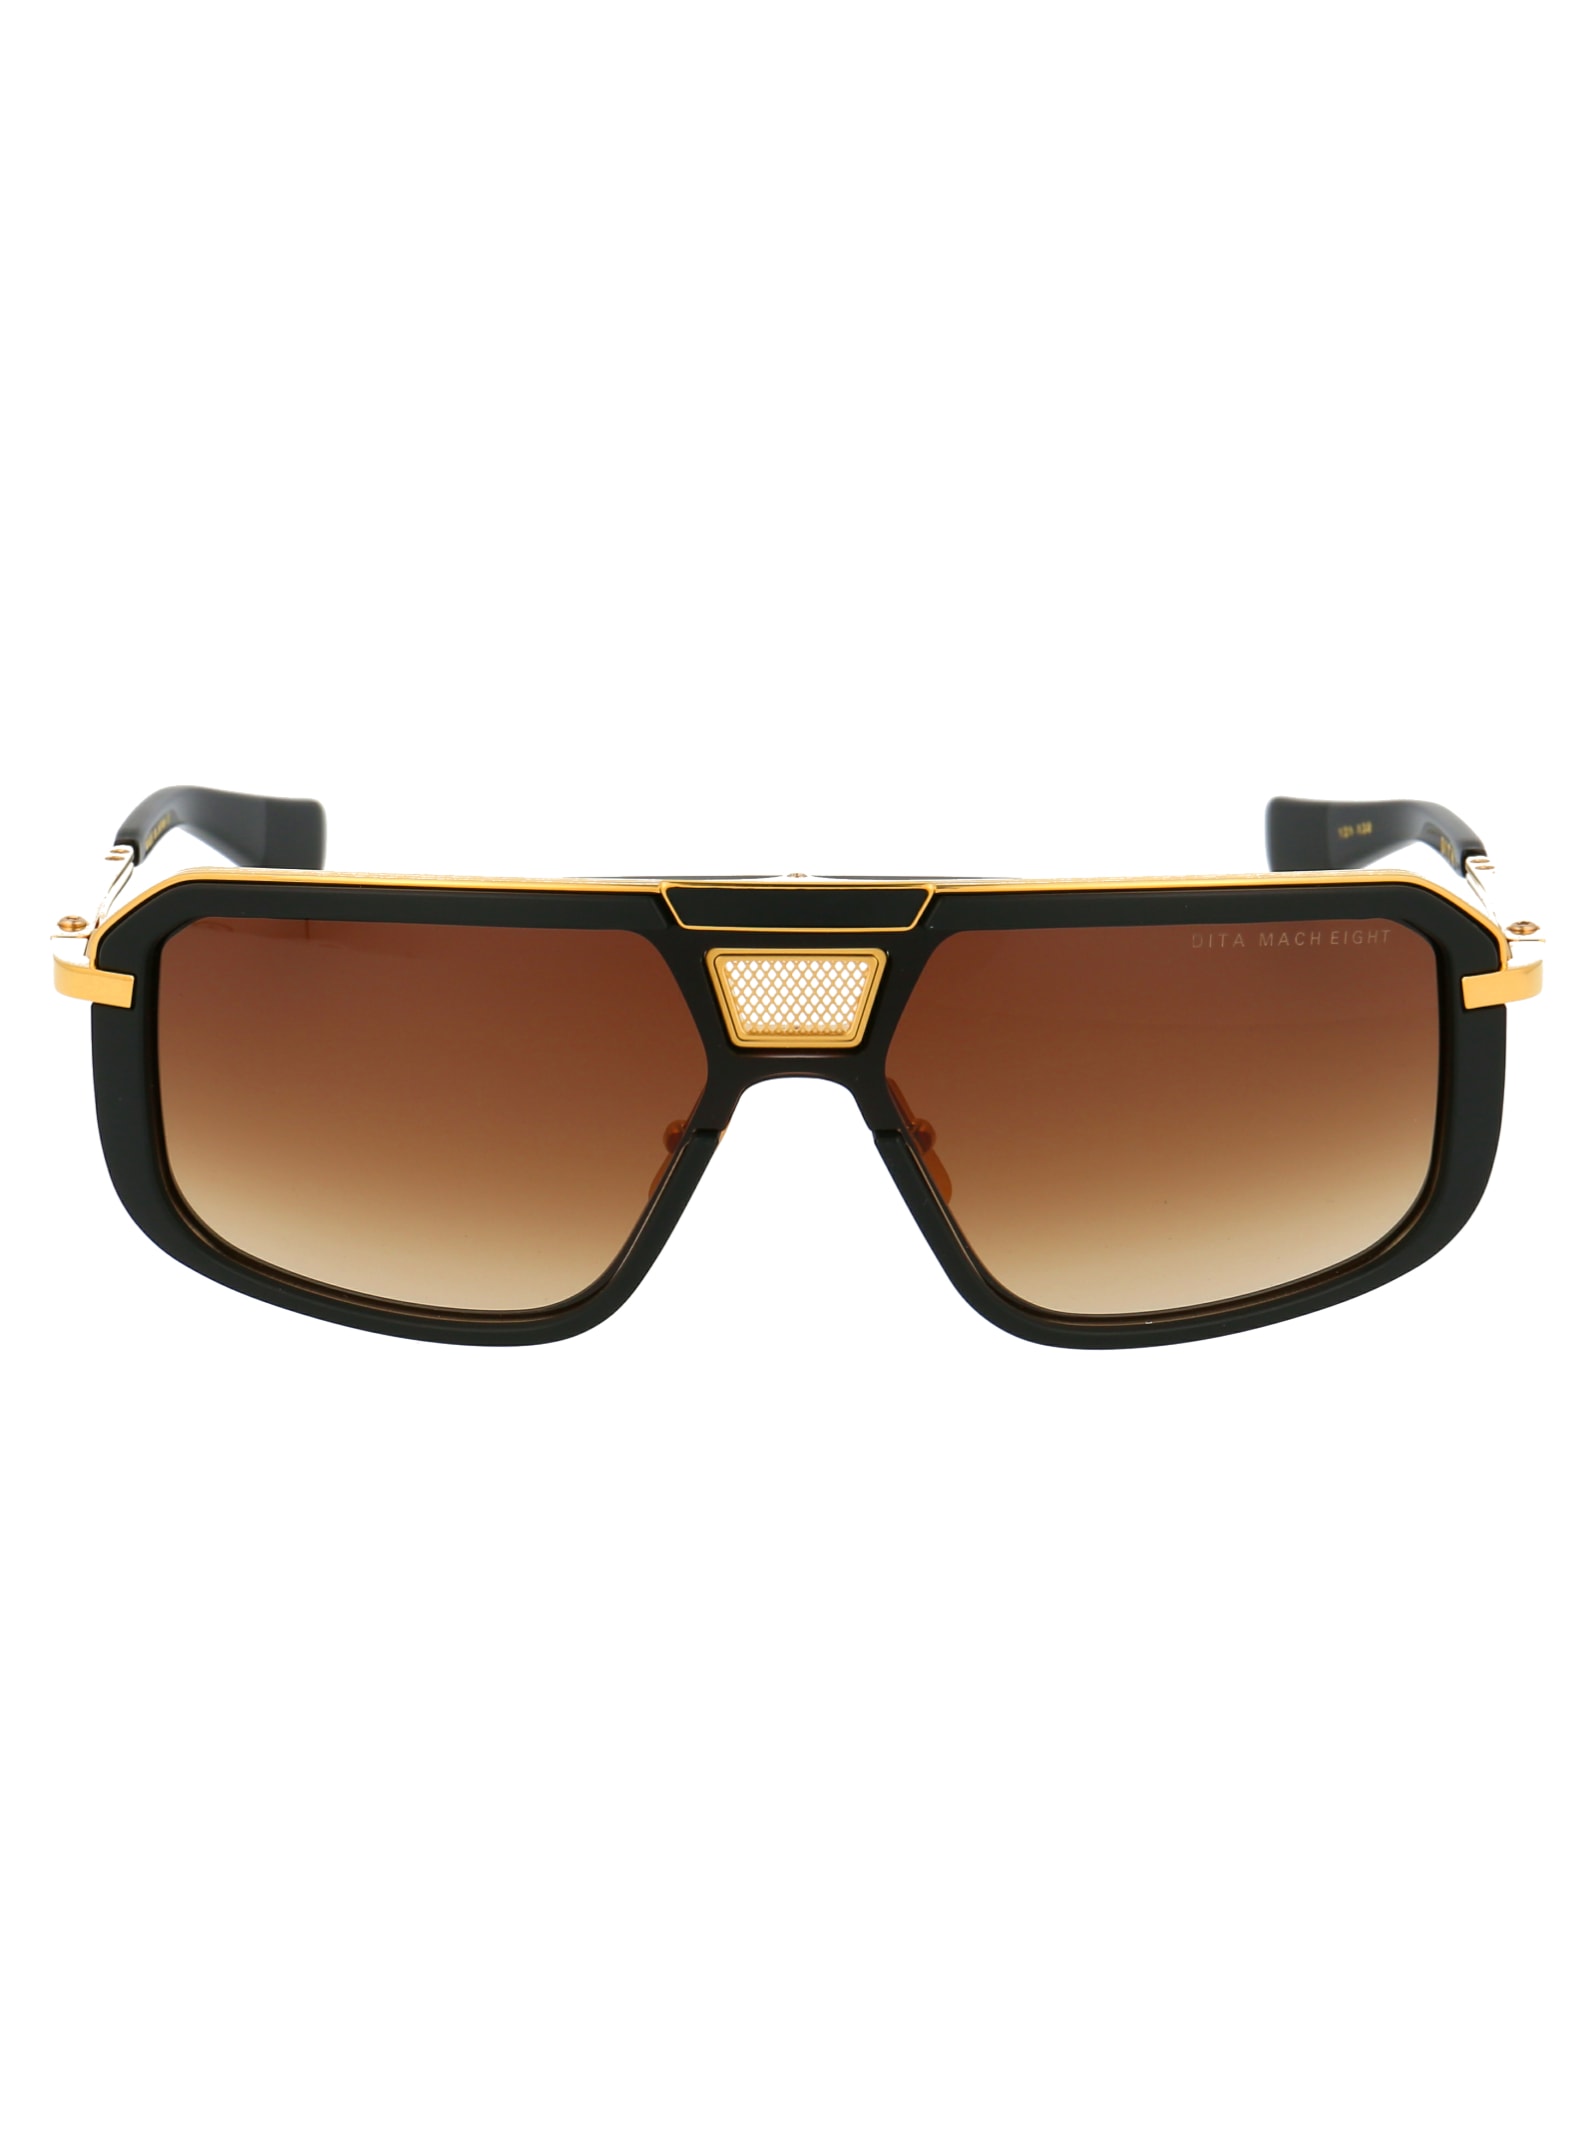 Mach-eight Sunglasses